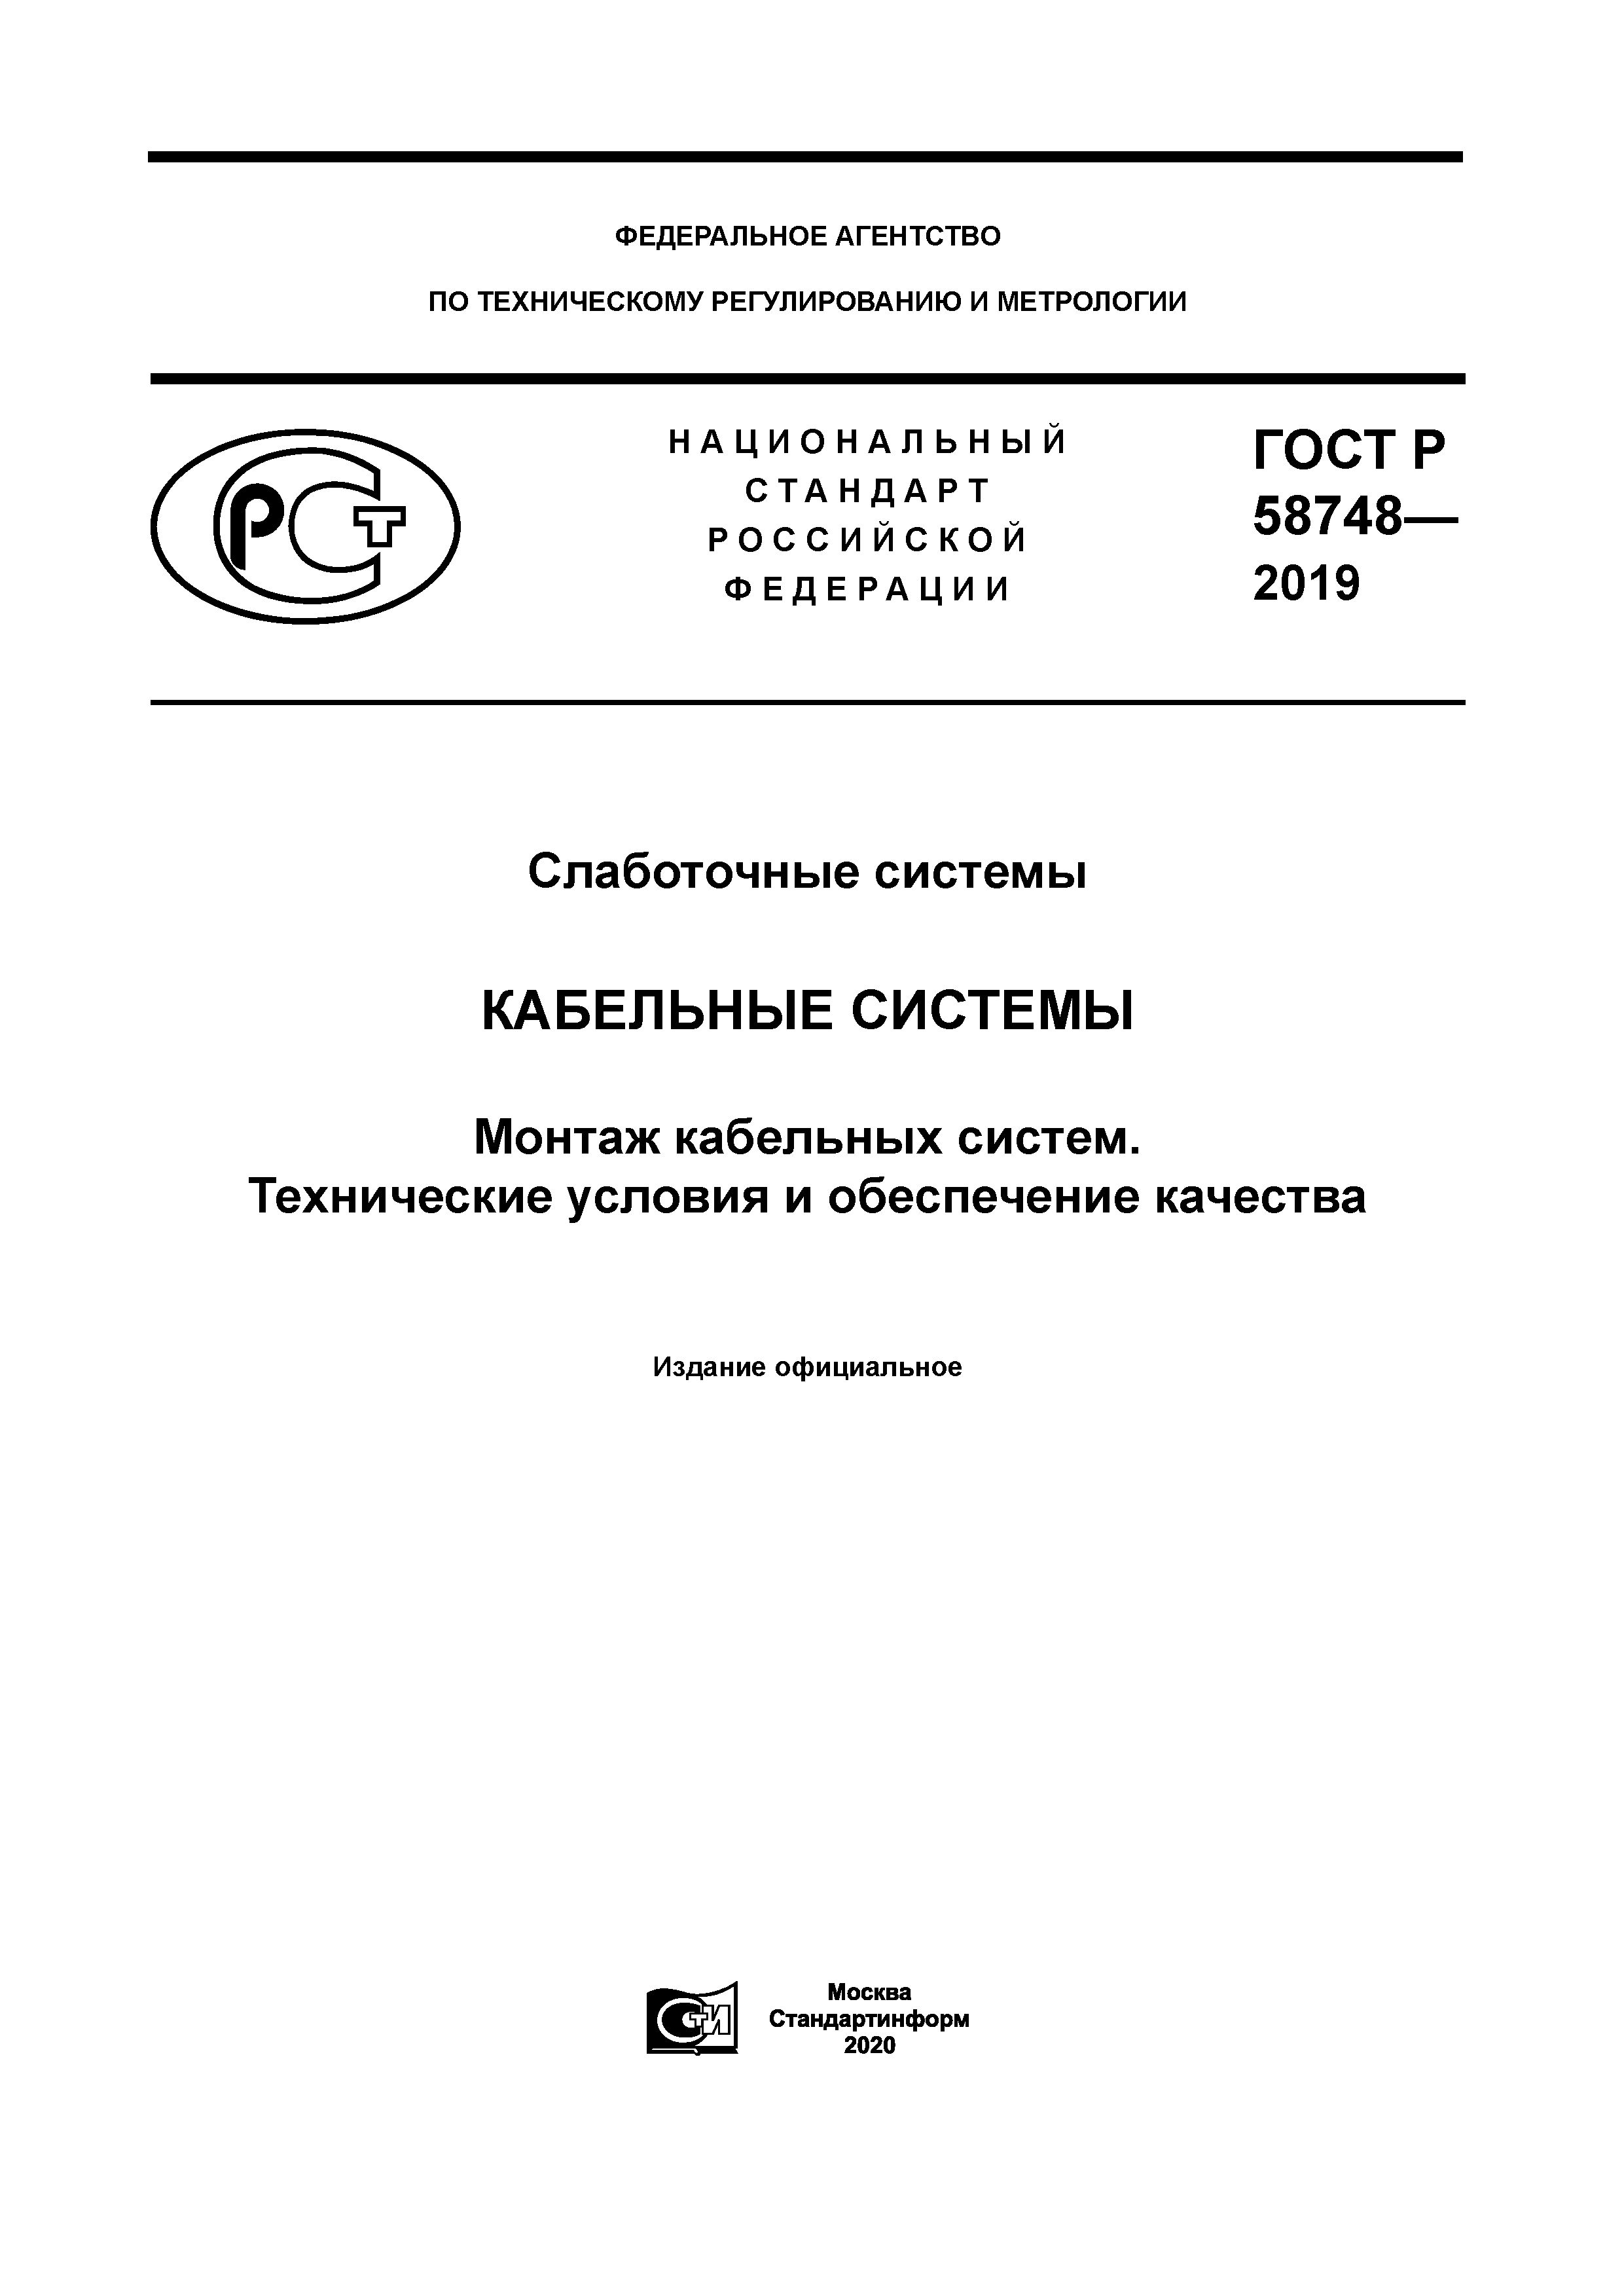 ГОСТ Р 58748-2019